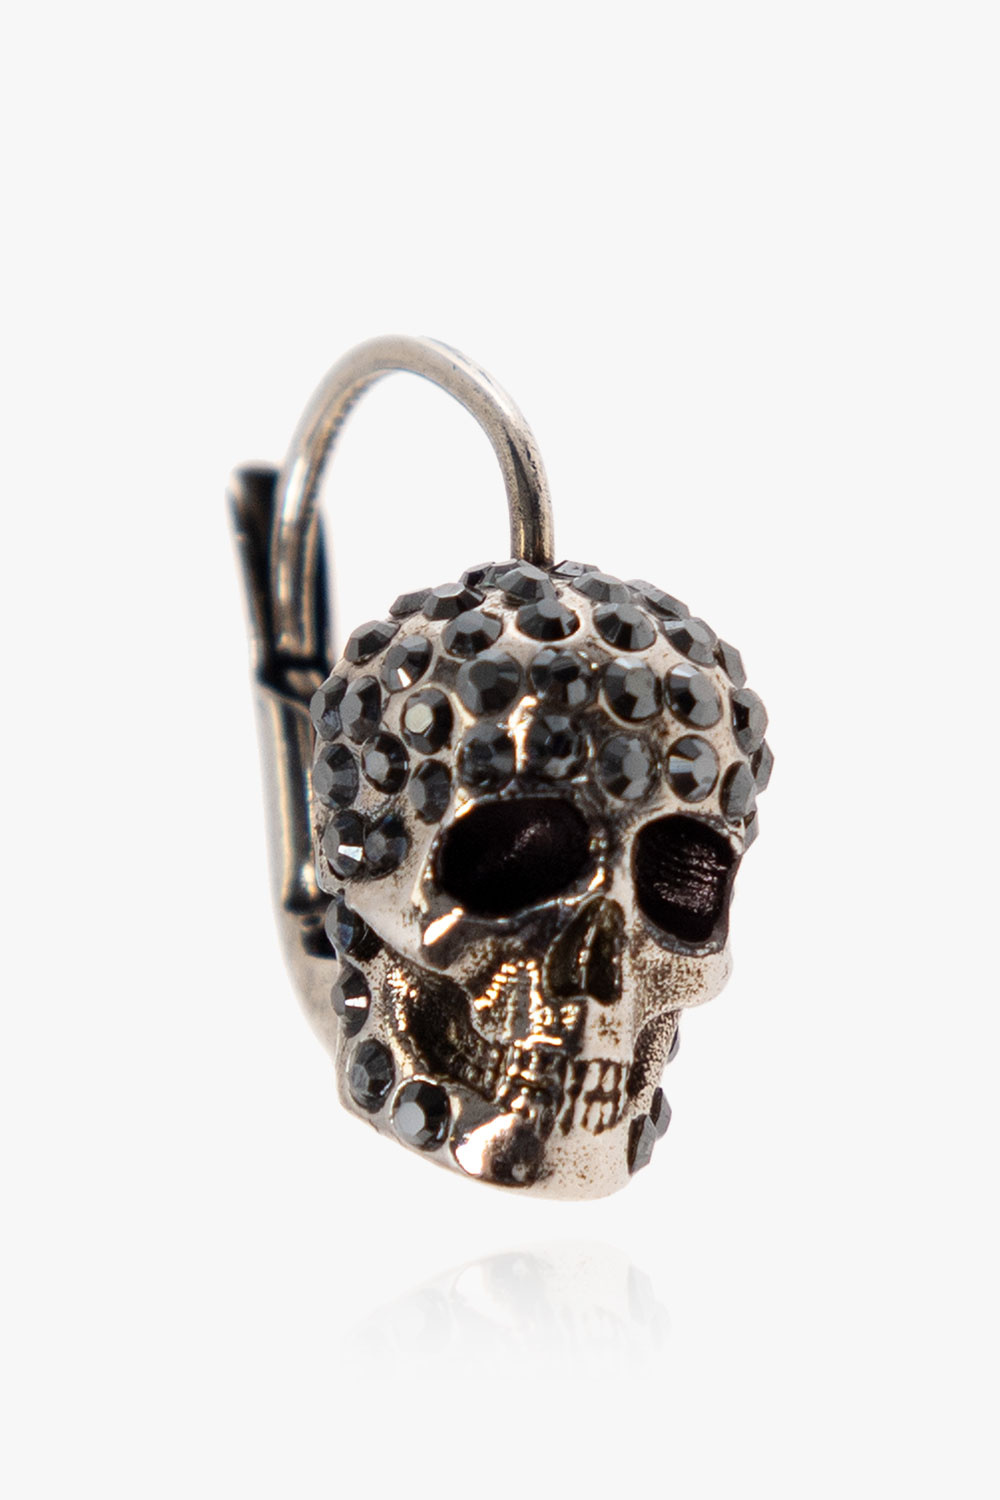 Alexander McQueen Brass earrings with skull motif